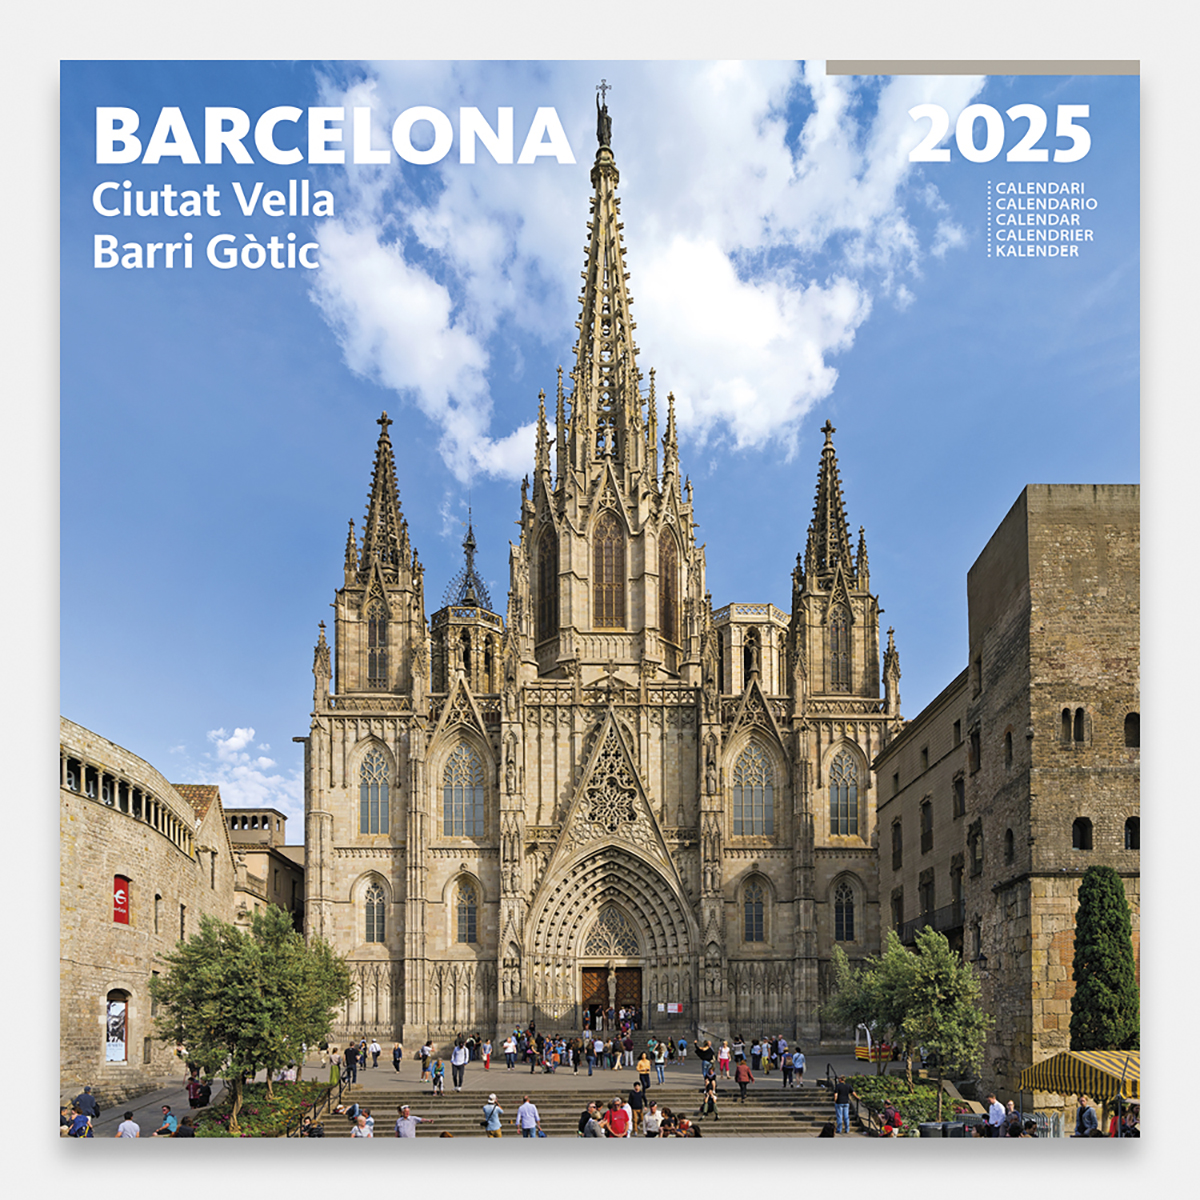 Calendar 2025 Barcelona. Ciutat Bella 25bg3 calendario pared 2025 barcelona